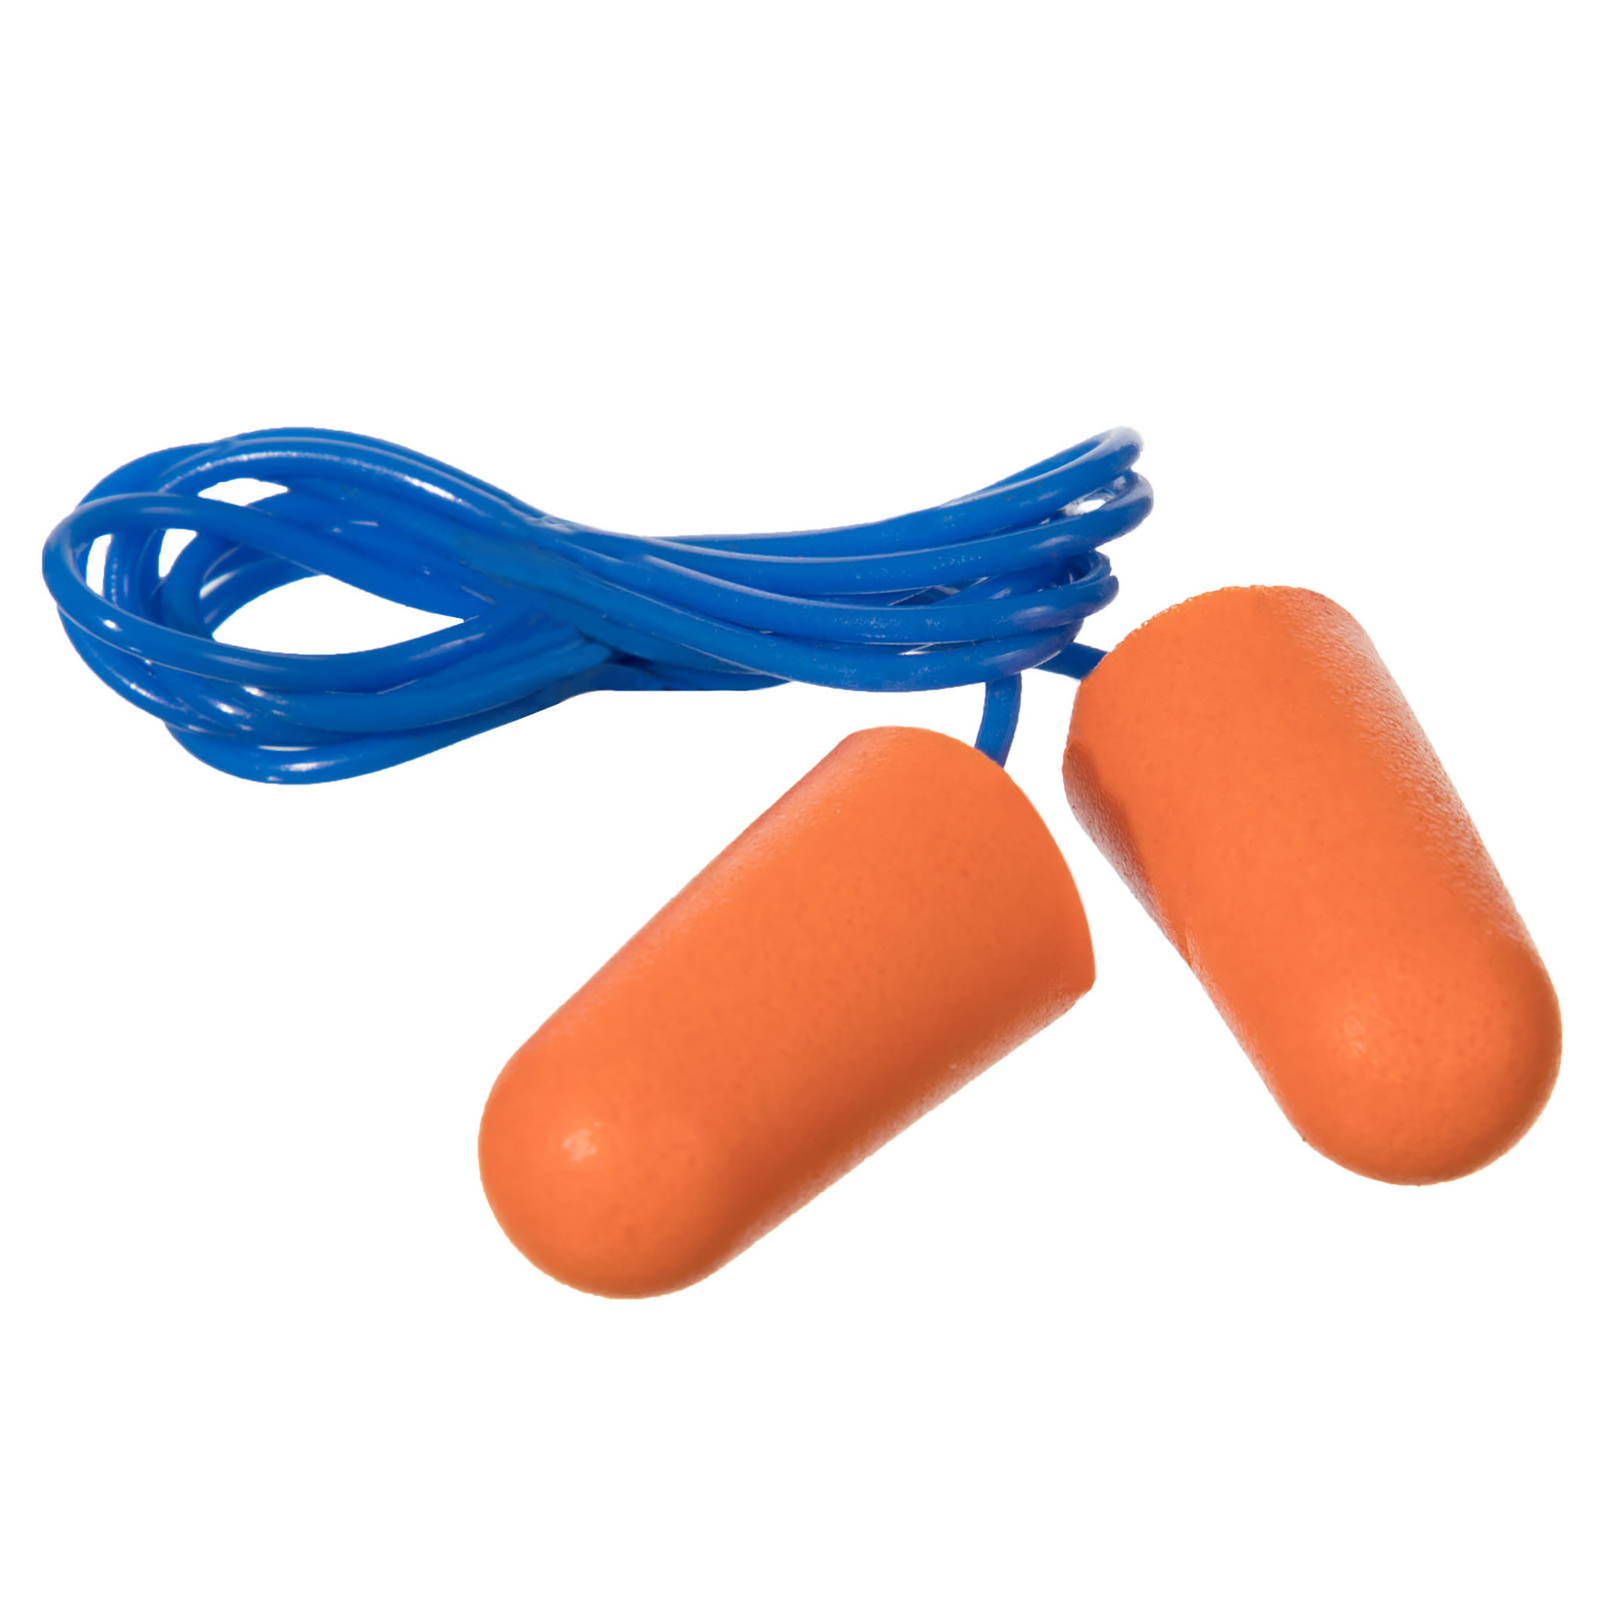 Close-up of one pair of JORESTECH ultra soft foam orange earplug with blue PVC cord